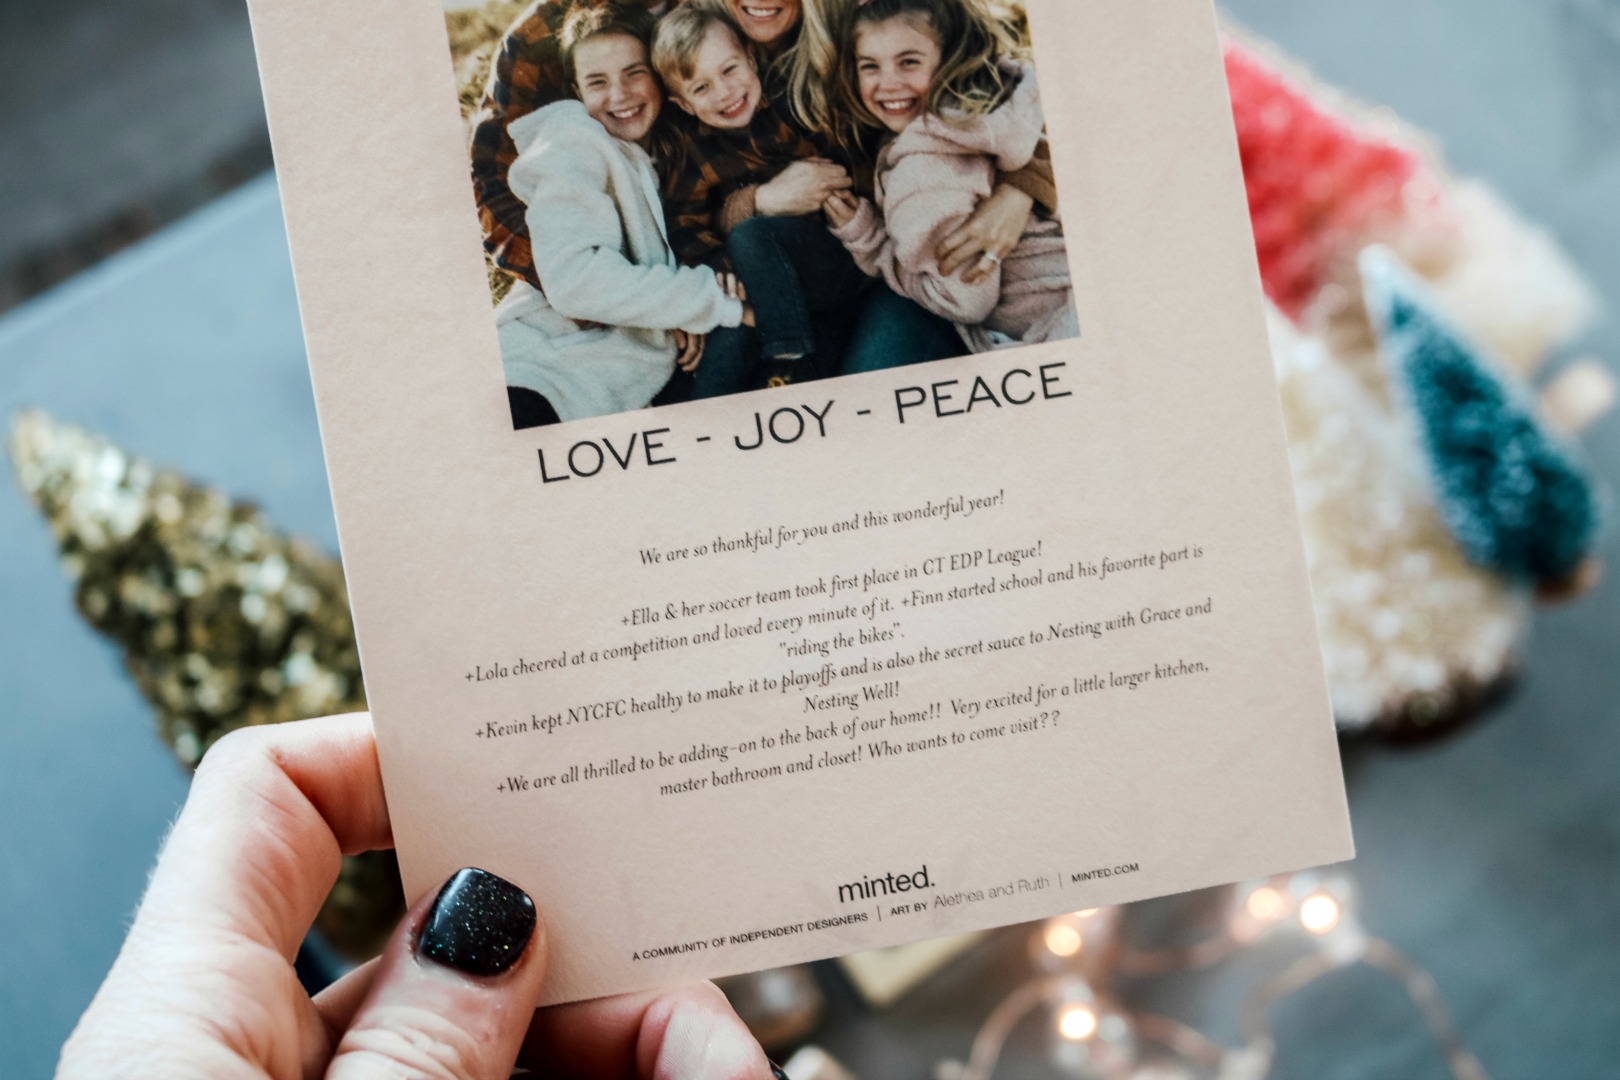 Our Christmas Cards- Family Photos